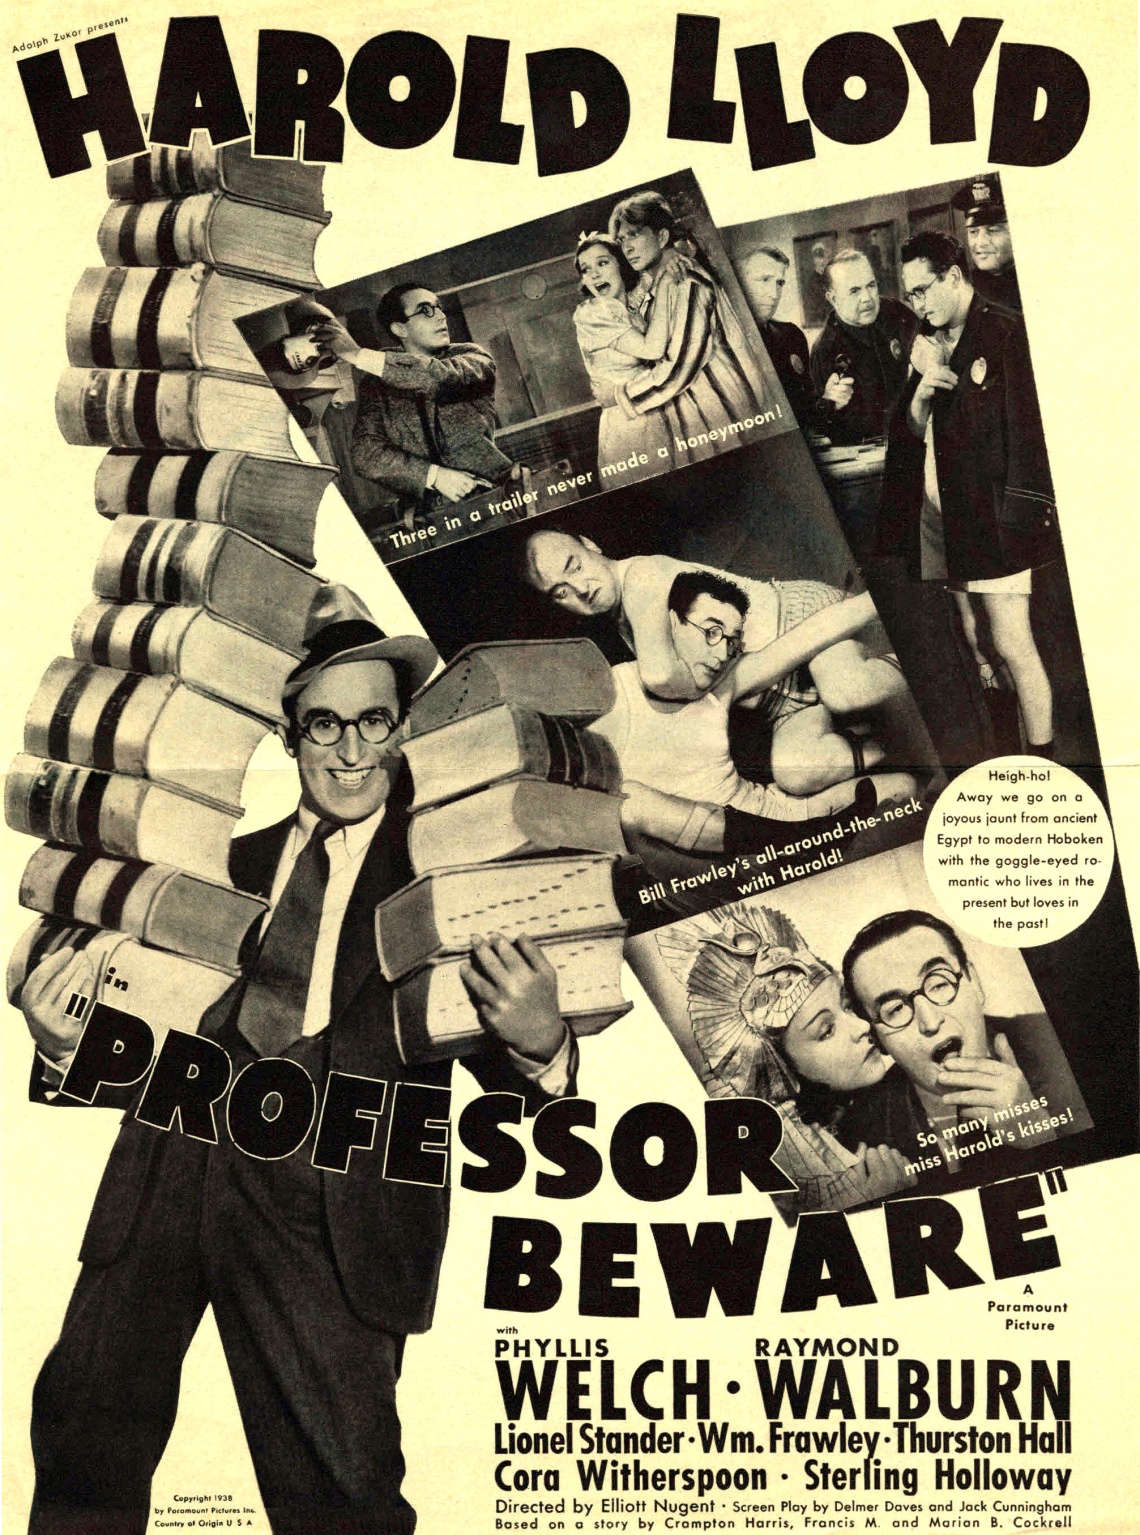 Professor Beware (1938) was Harold Lloyd's next-to-last starring film.